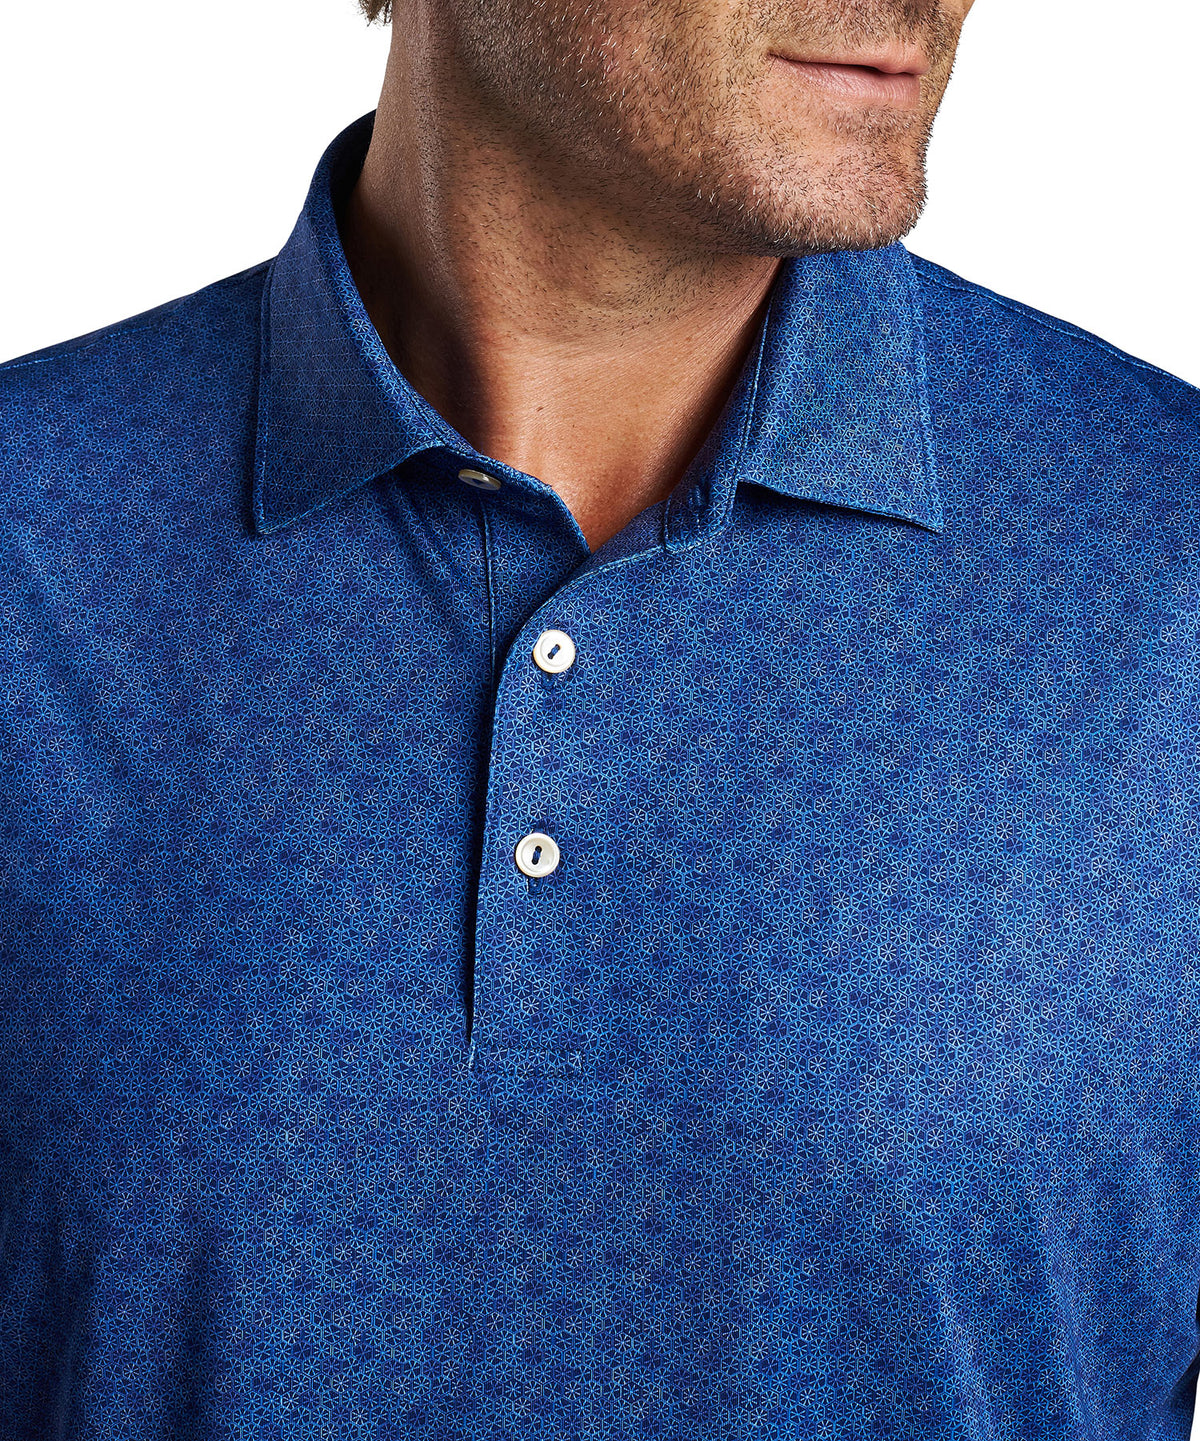 Peter Millar Short Sleeve Citrus Print Polo Knit Shirt, Big & Tall